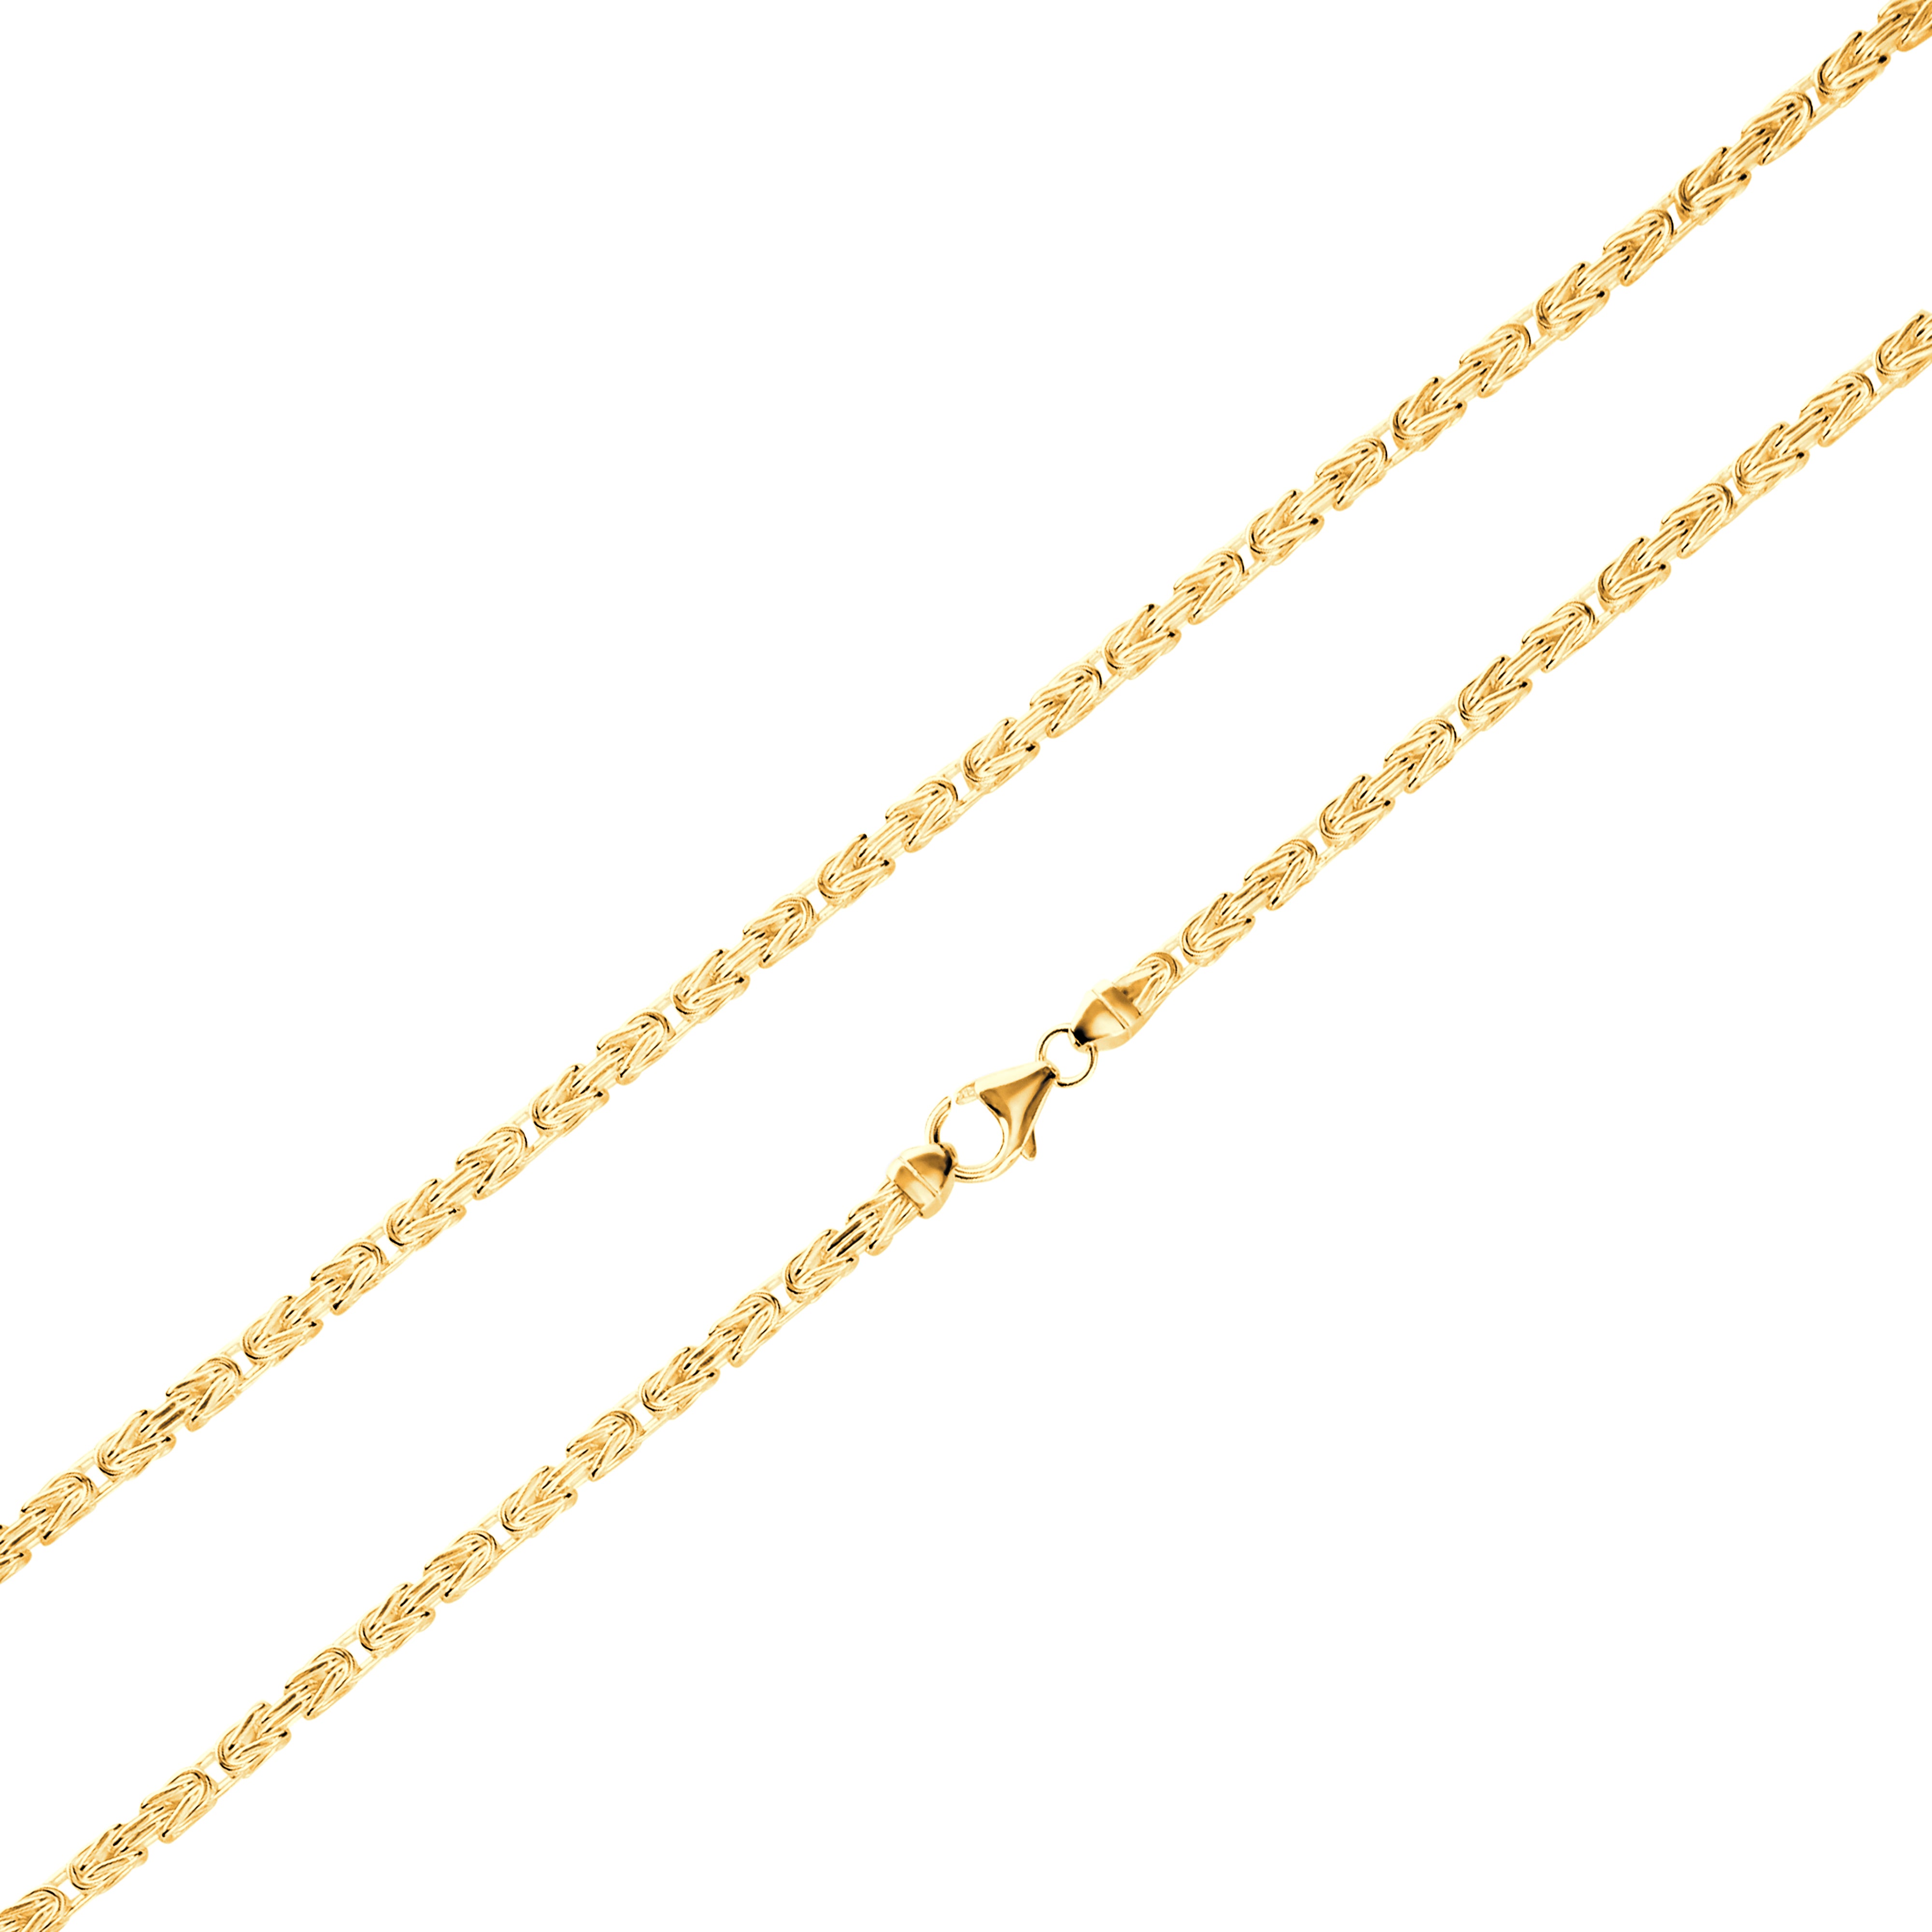 Byzantine chain 4mm wide - 585 gold